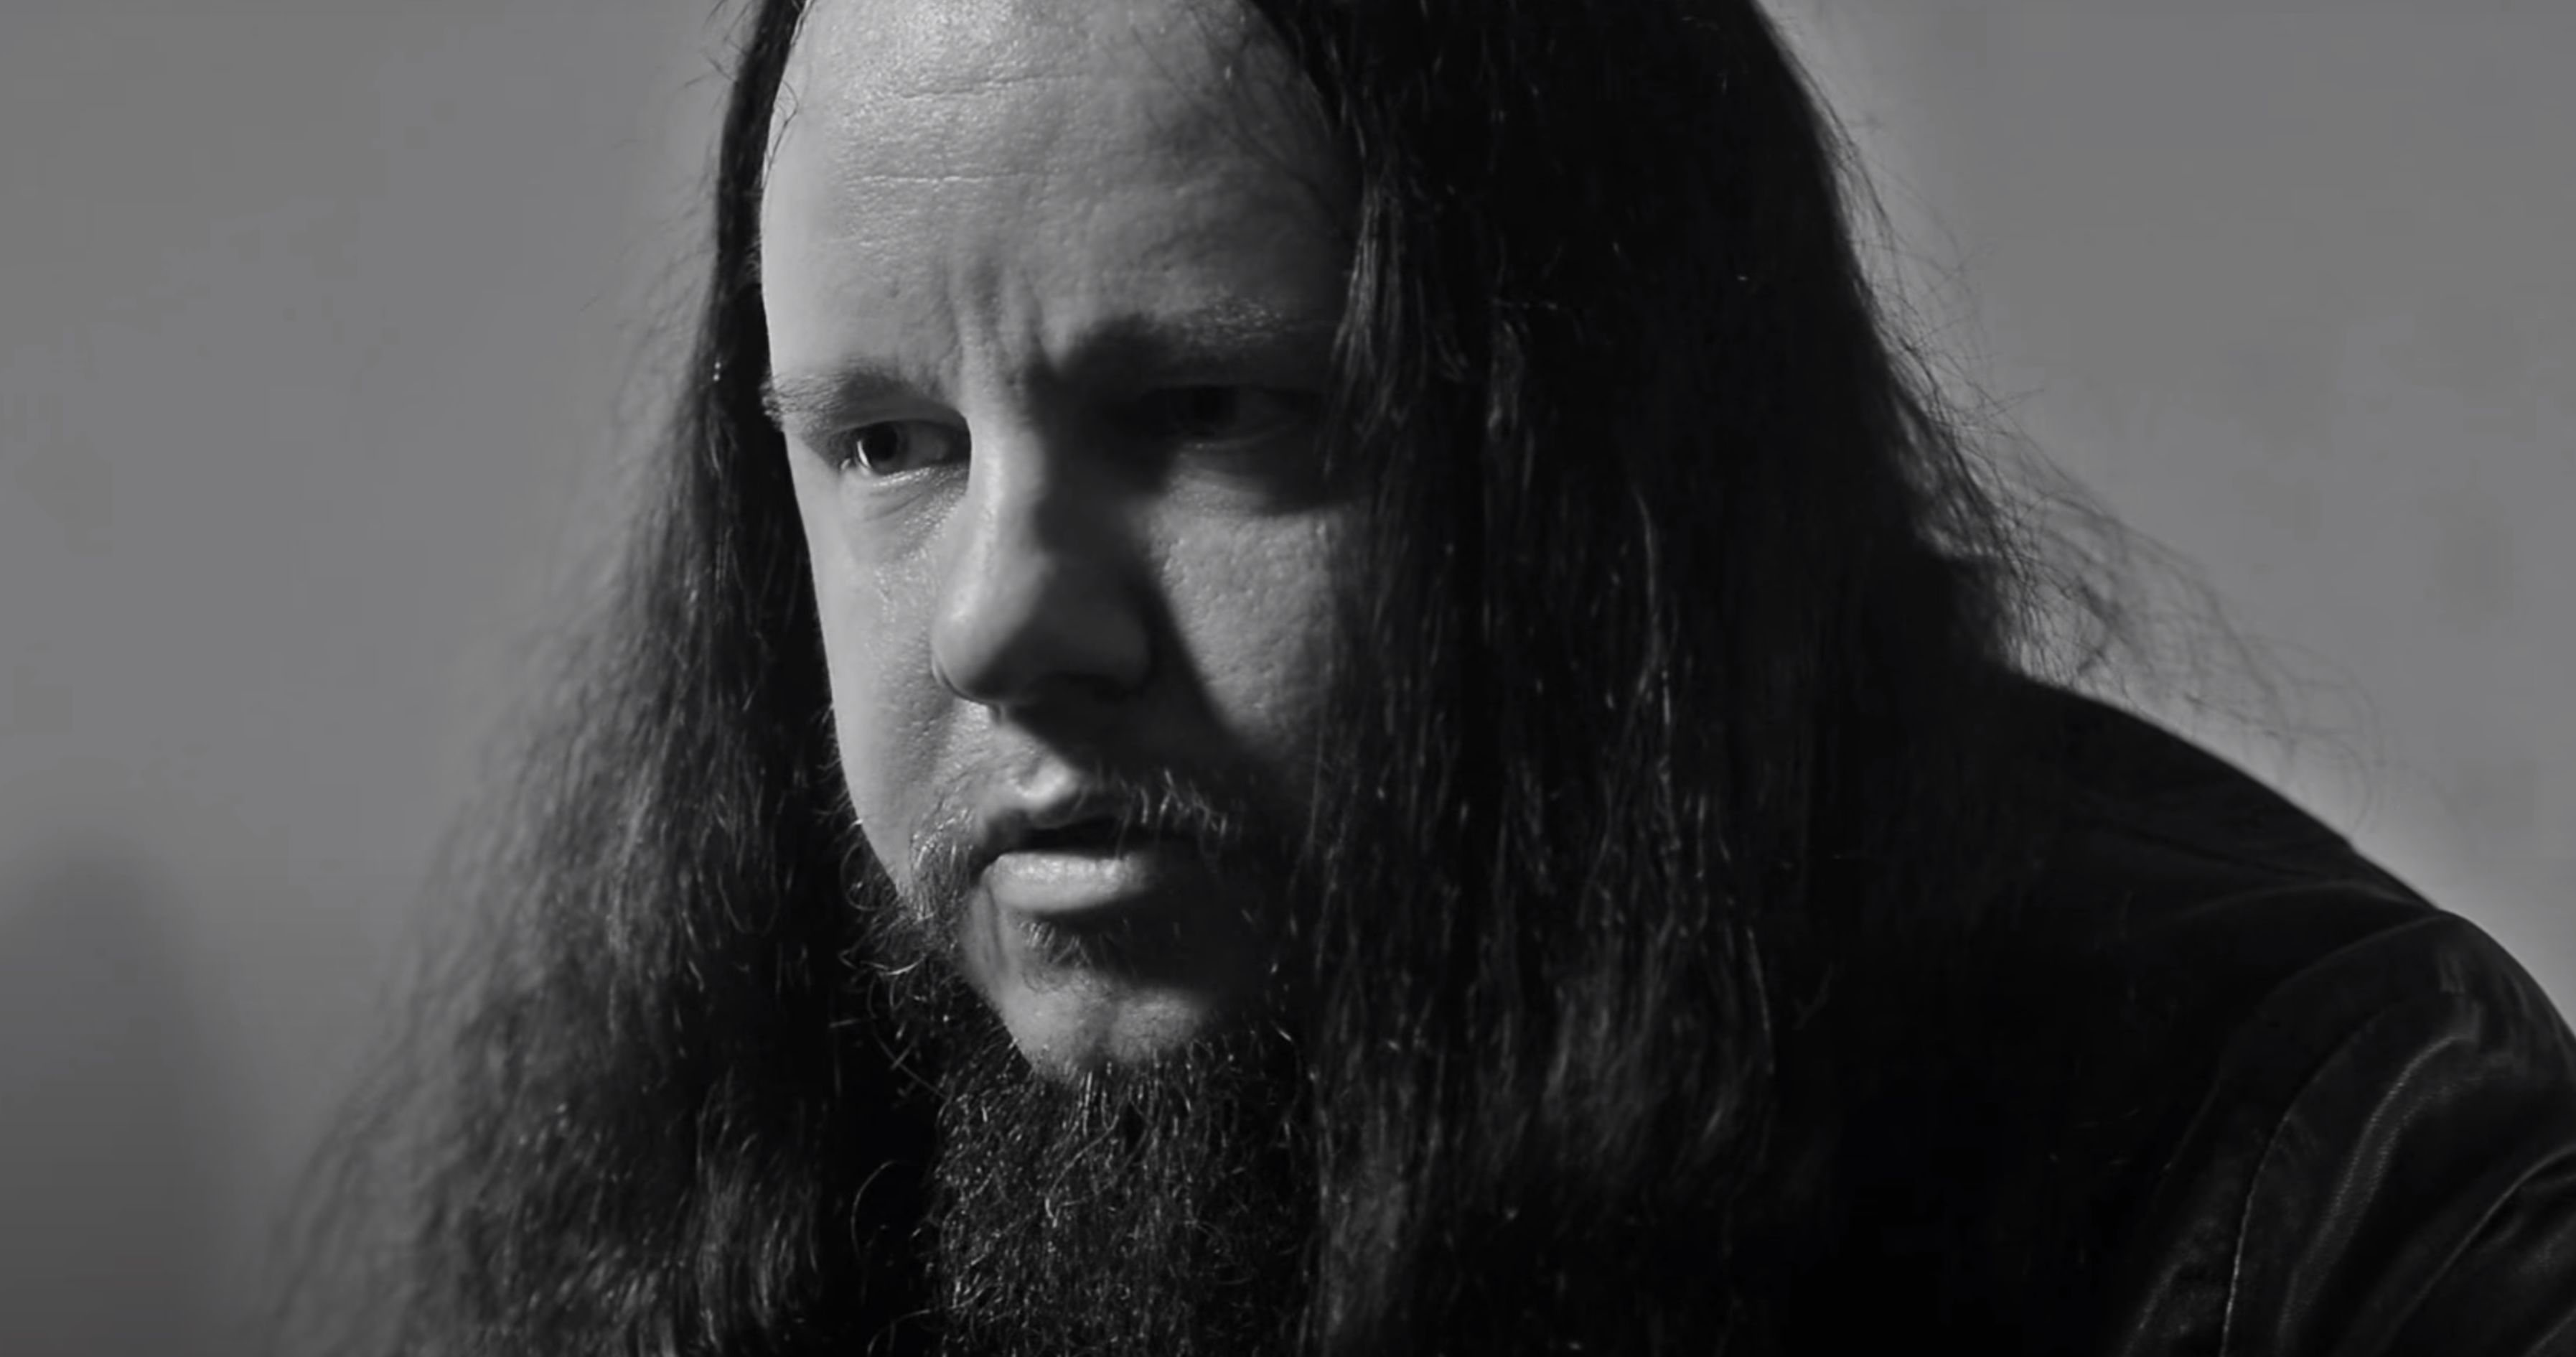 Joey Jordison, Former Slipknot Drummer, Dies at 46